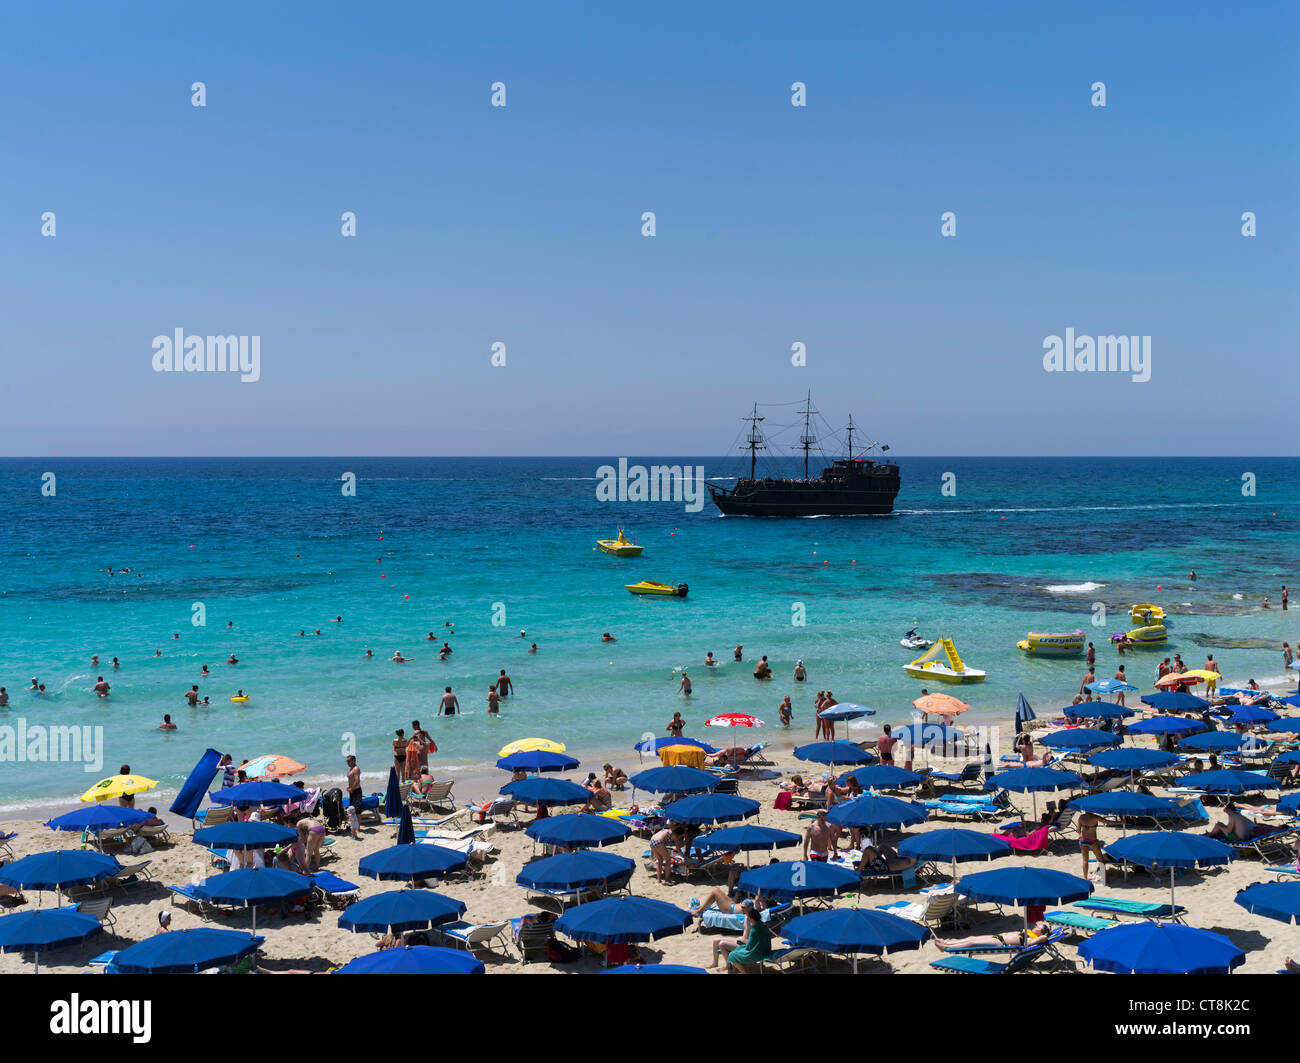 dh Grecian Bay AYIA NAPA CYPRUS Black Pearl Pirate ship Sun umbrellas beach sunbathers swimmers beaches Stock Photo